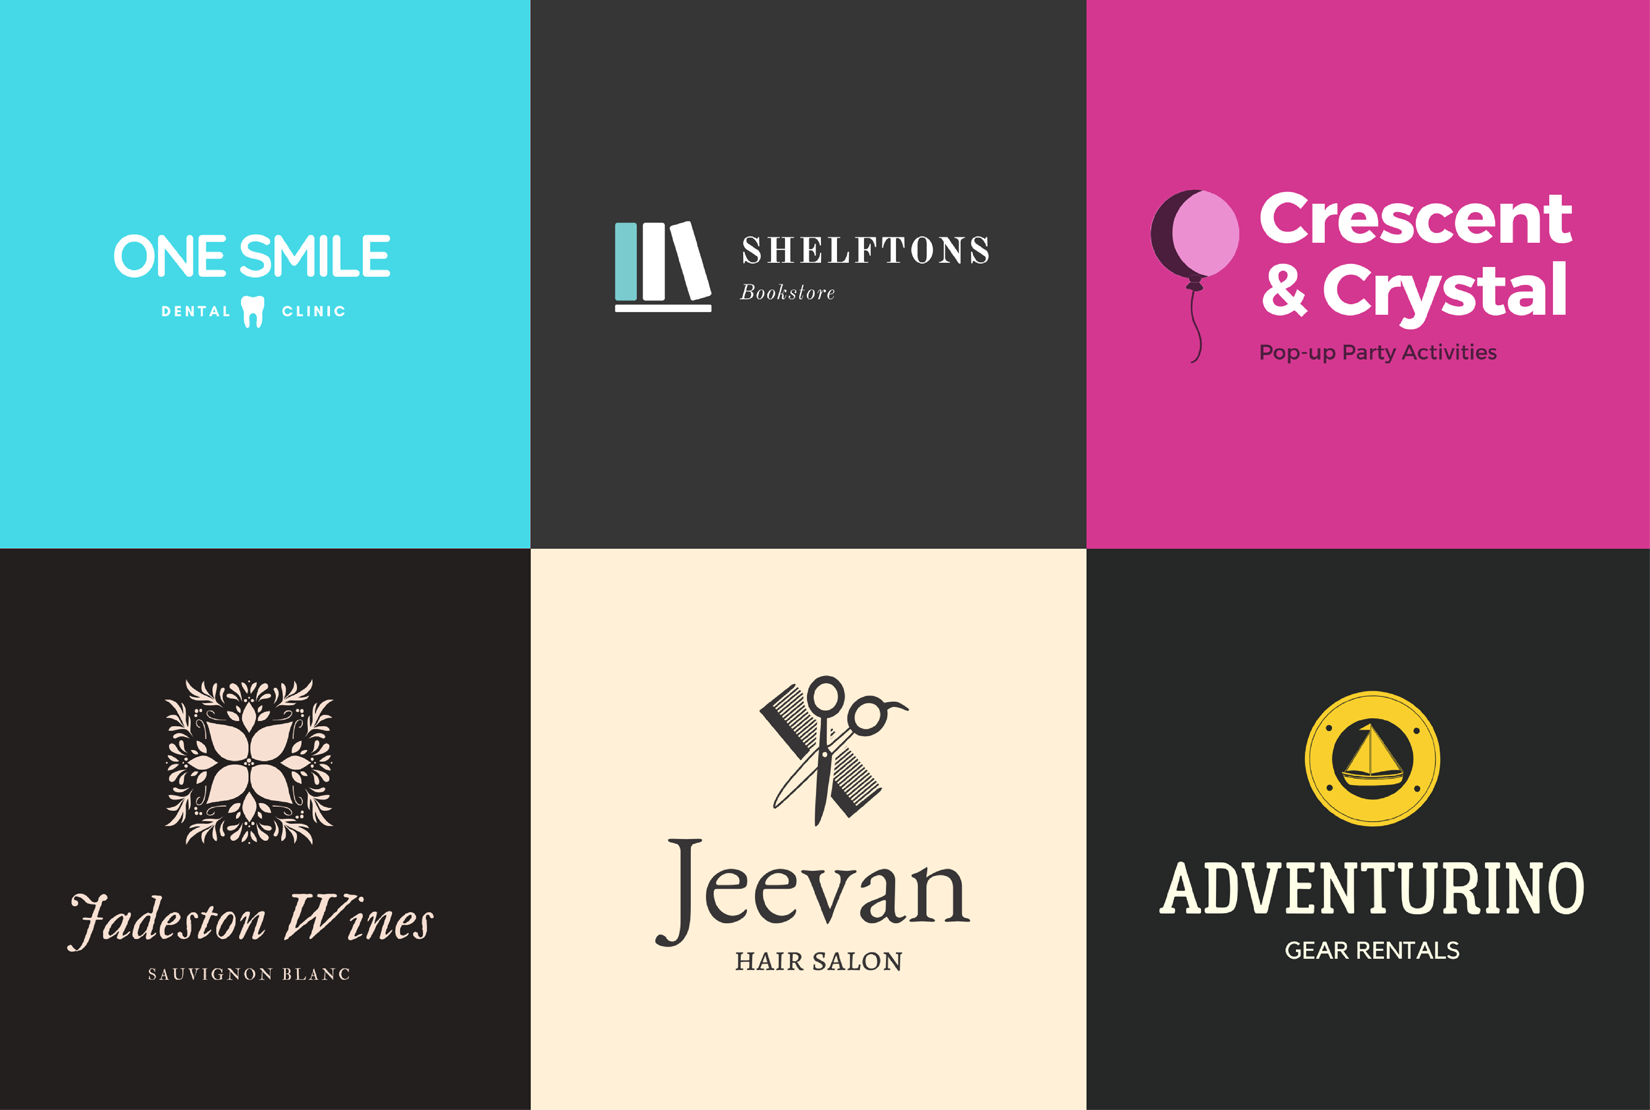 I will design 2 creative unique logos for your brand